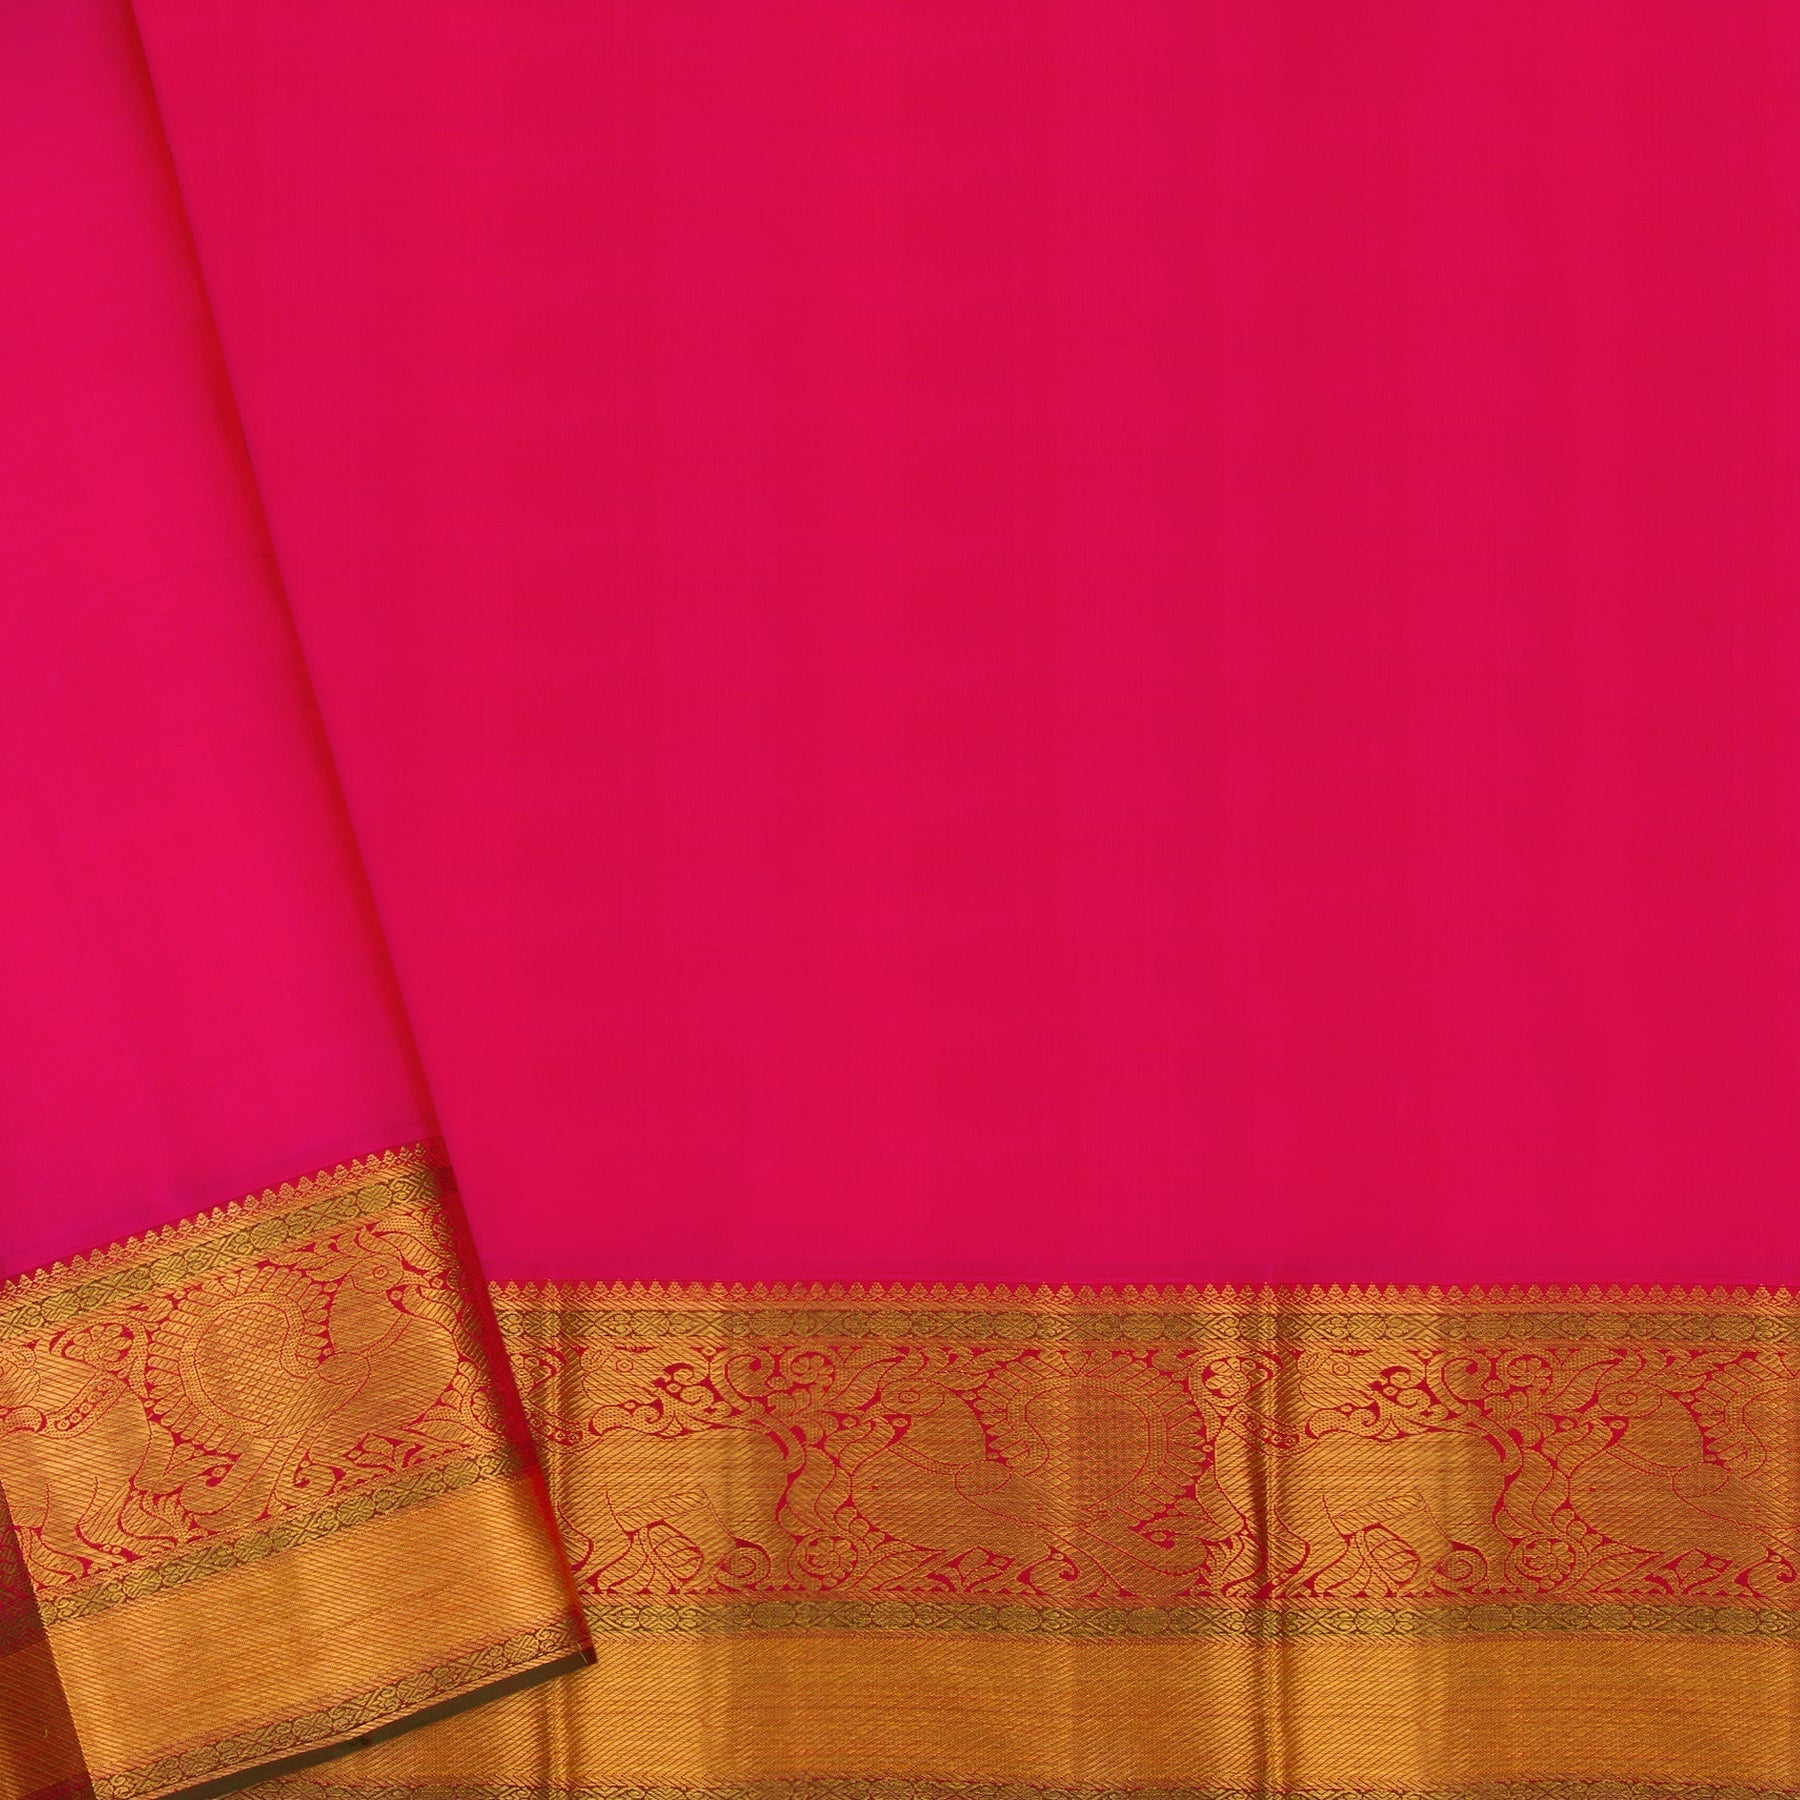 Kanakavalli Kanjivaram Silk Sari 21-110-HS001-08406 - Blouse View